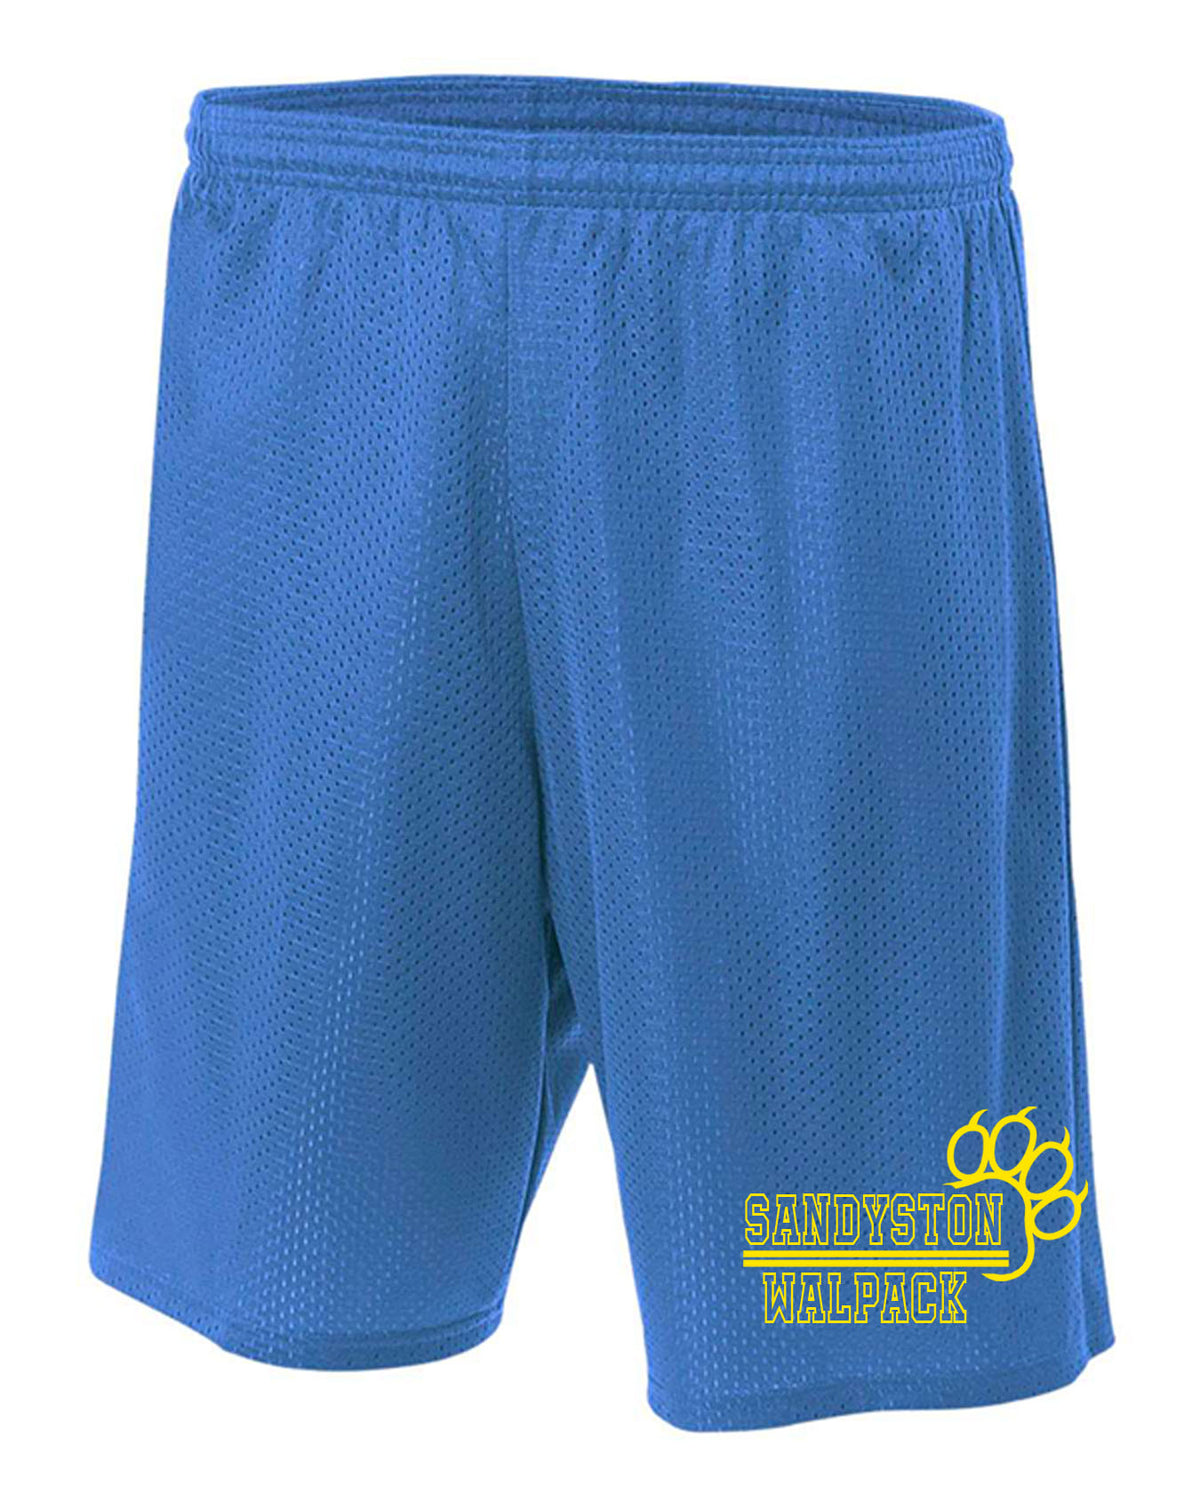 Sandyston Walpack Design 16 Mesh Shorts